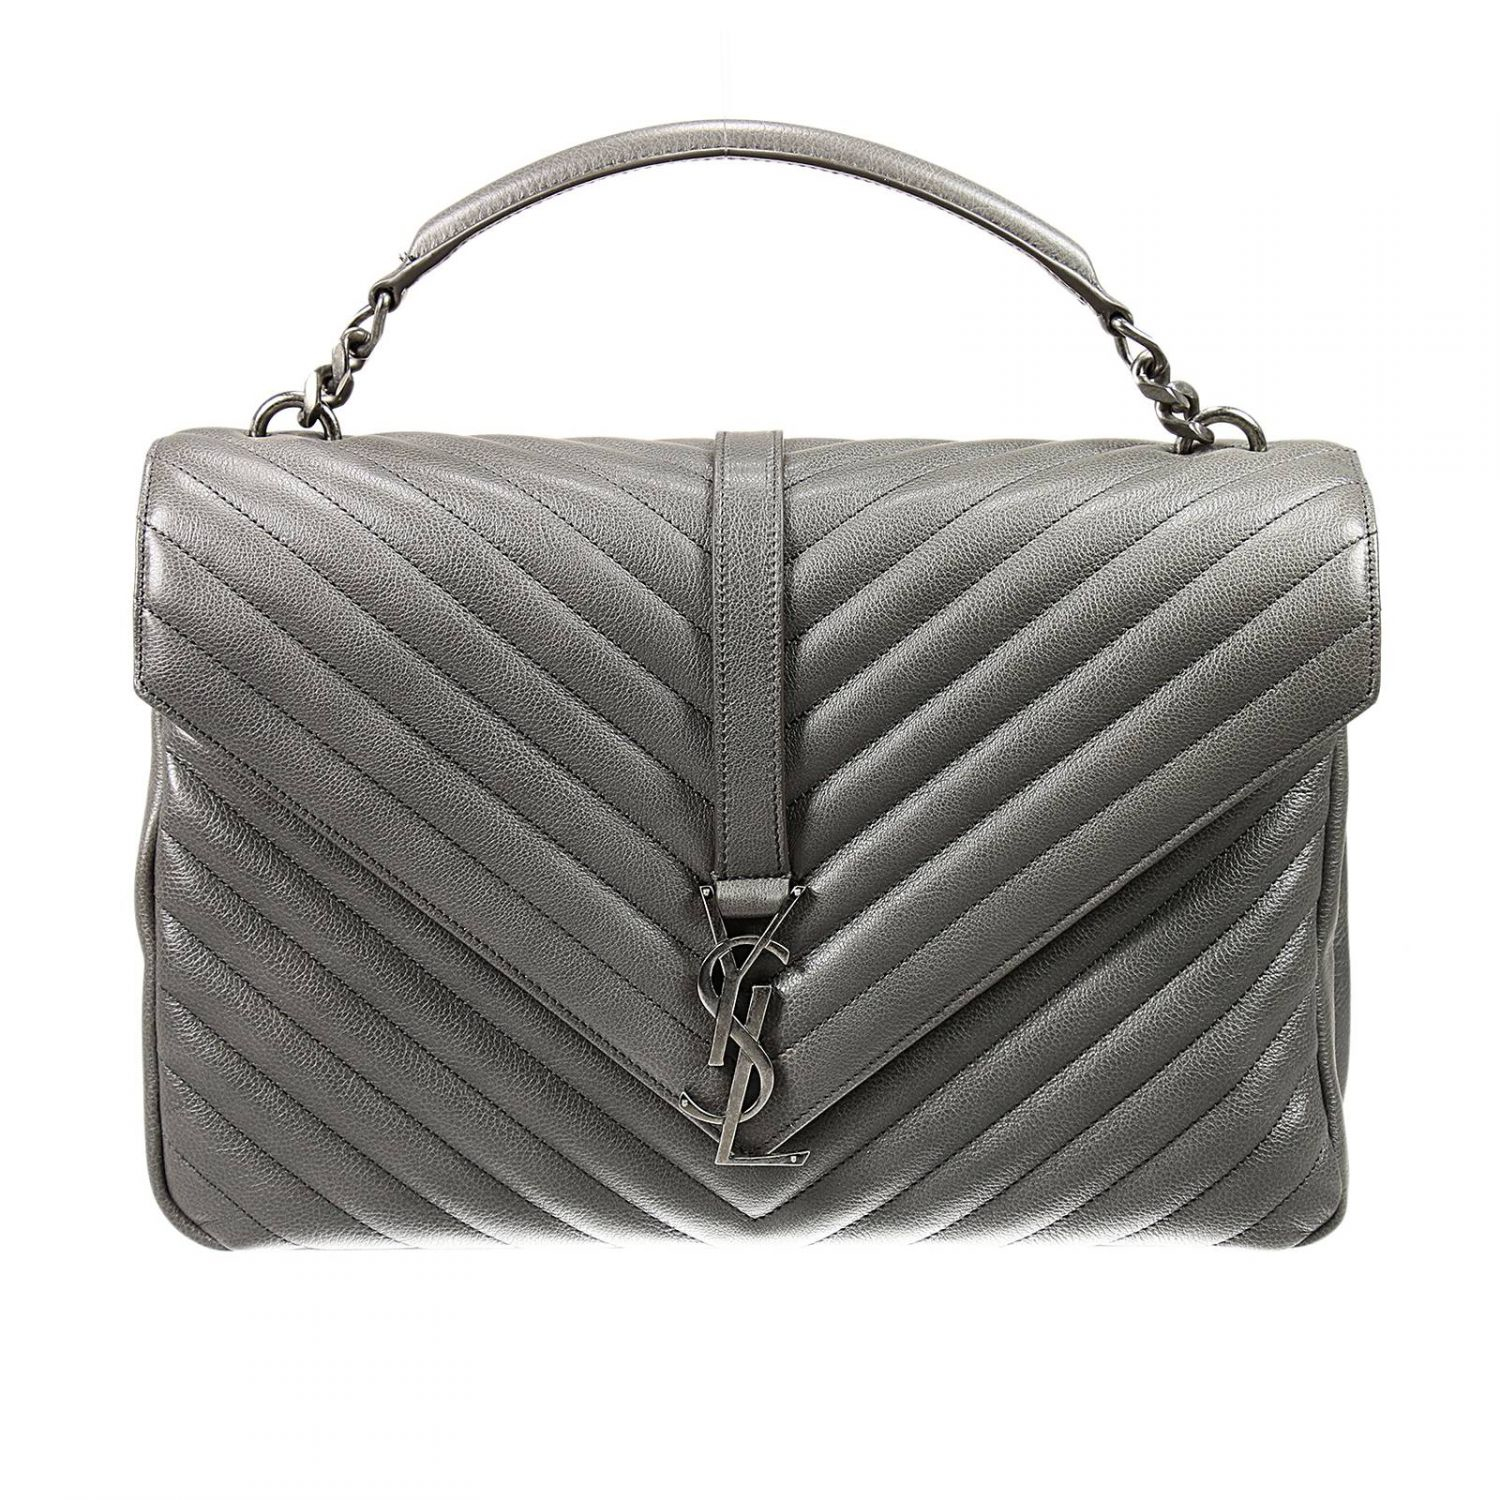 Dior Handbags At Neiman Marcus: 2018